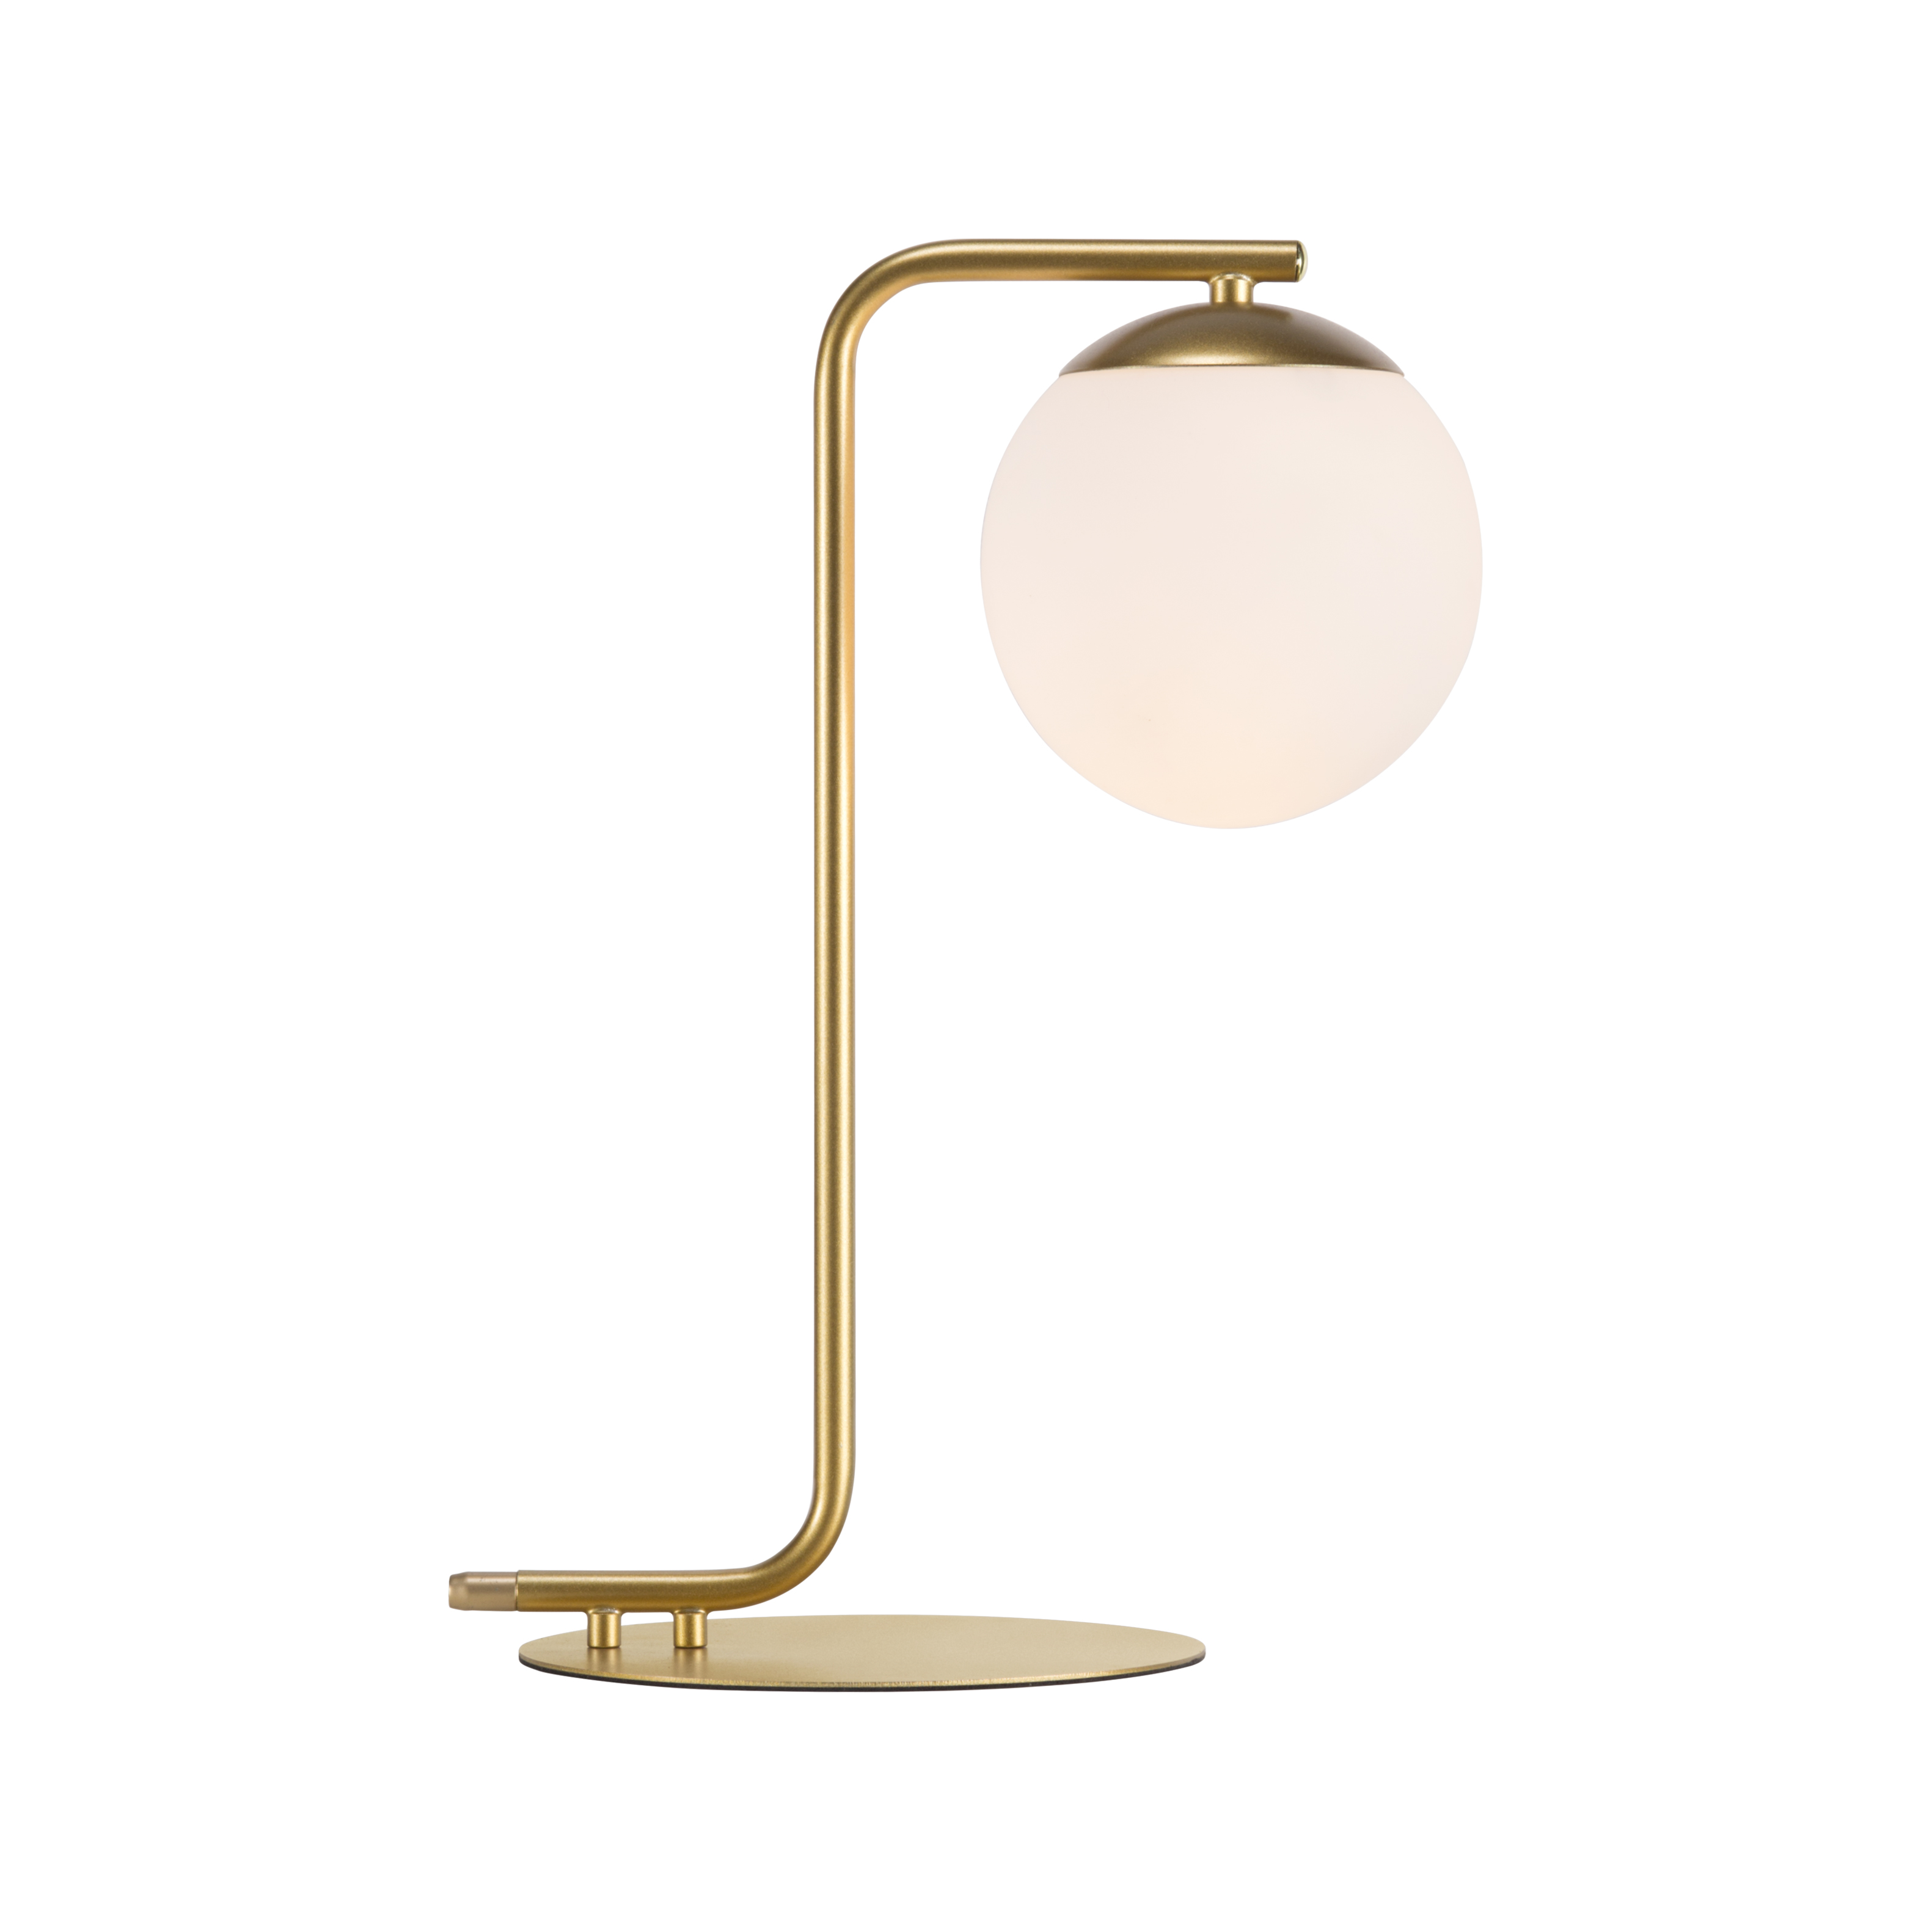 Grant | Table lamp | Brass